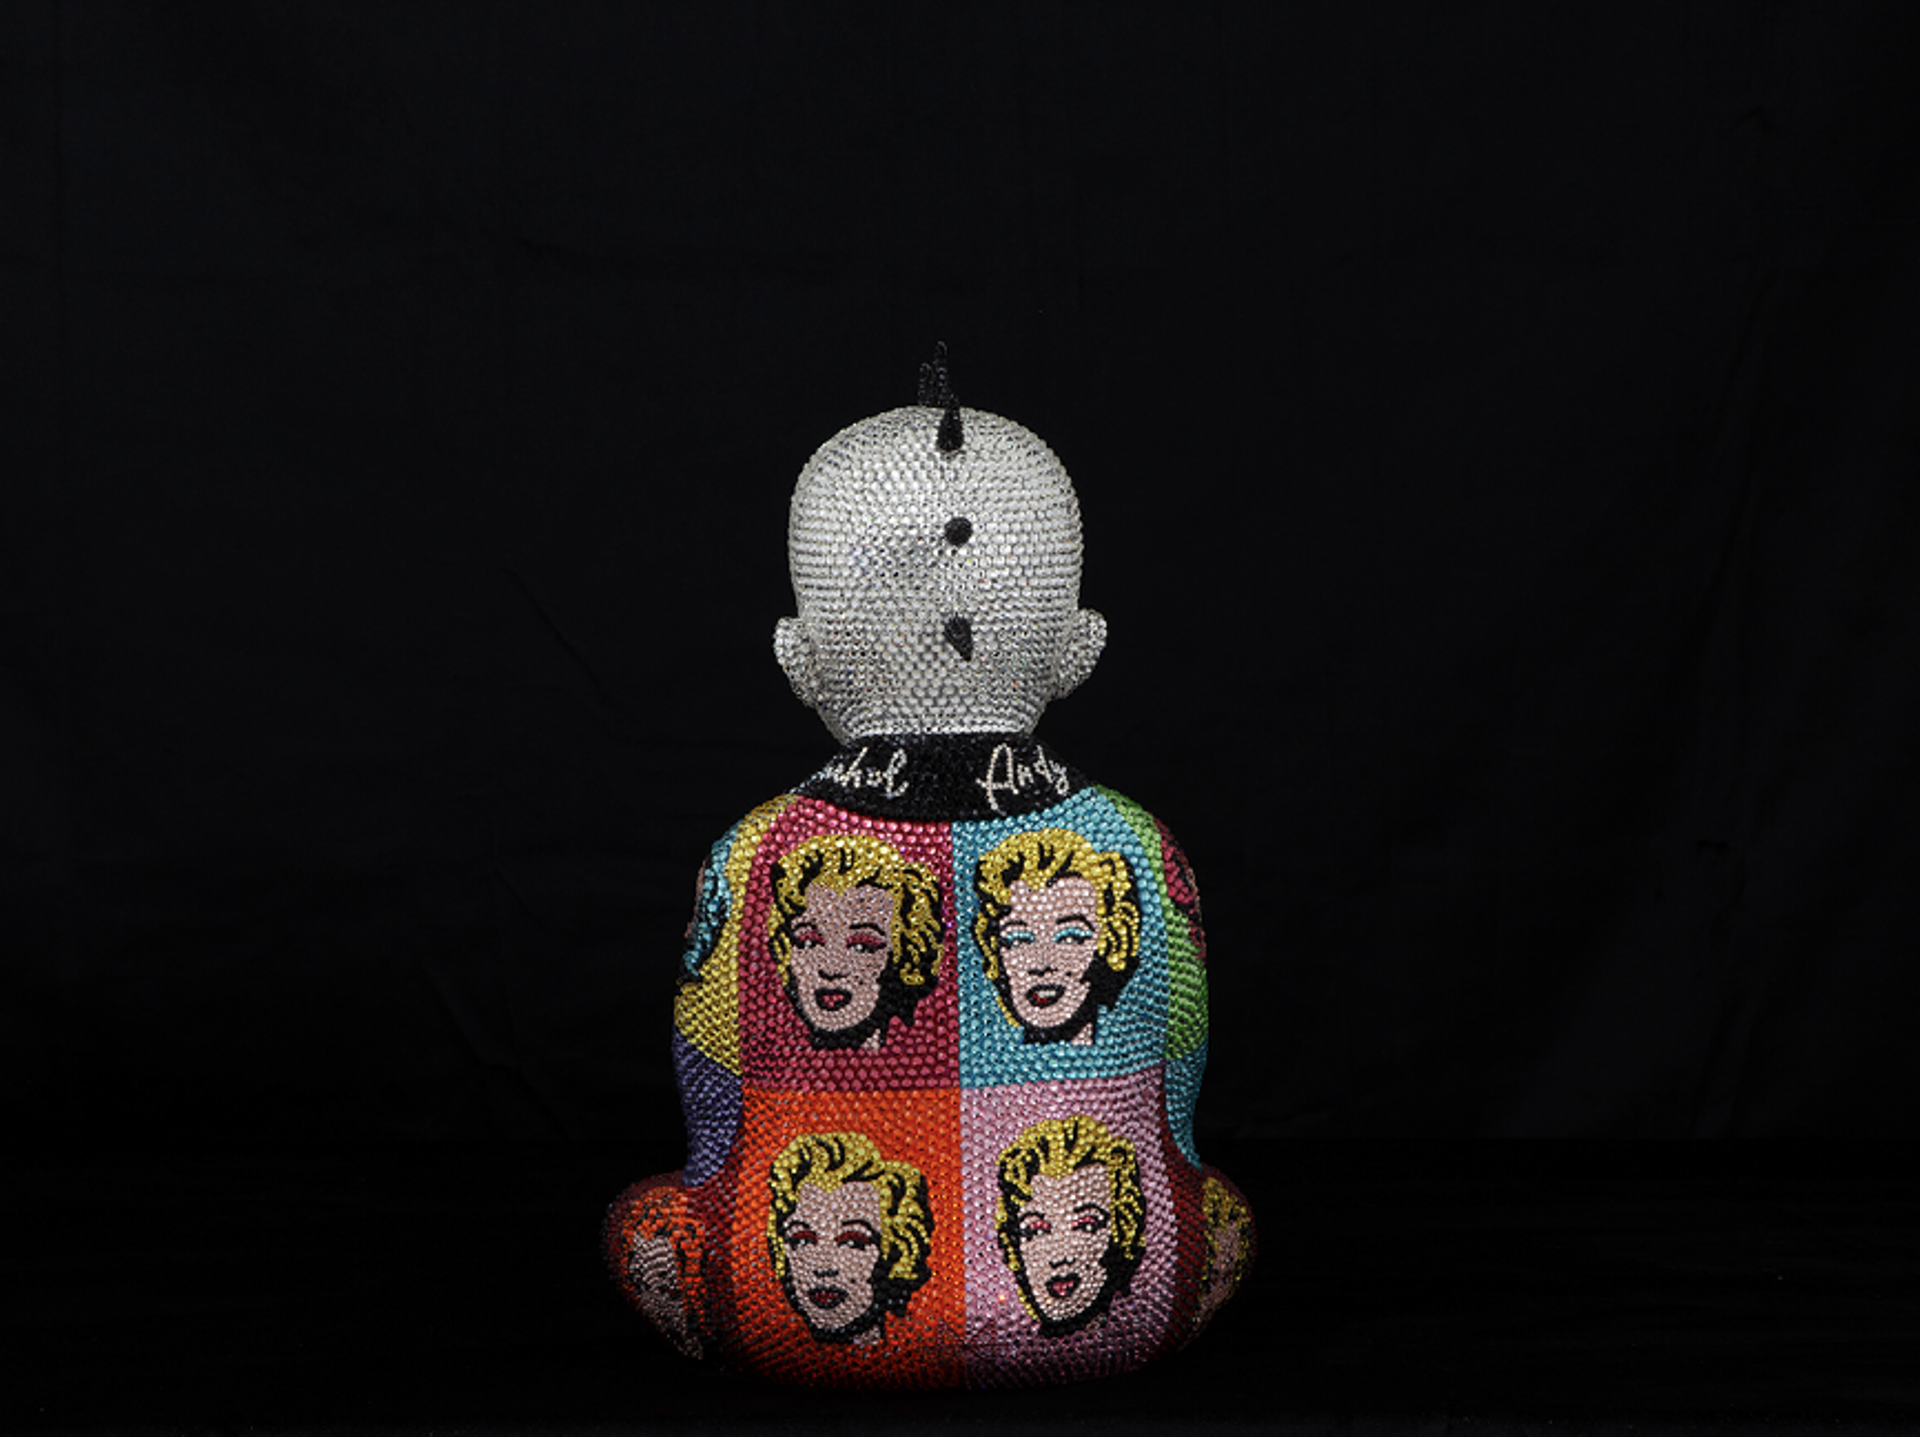 PunkBuddha "Marilyn in Multicolor" medium by Metis Atash